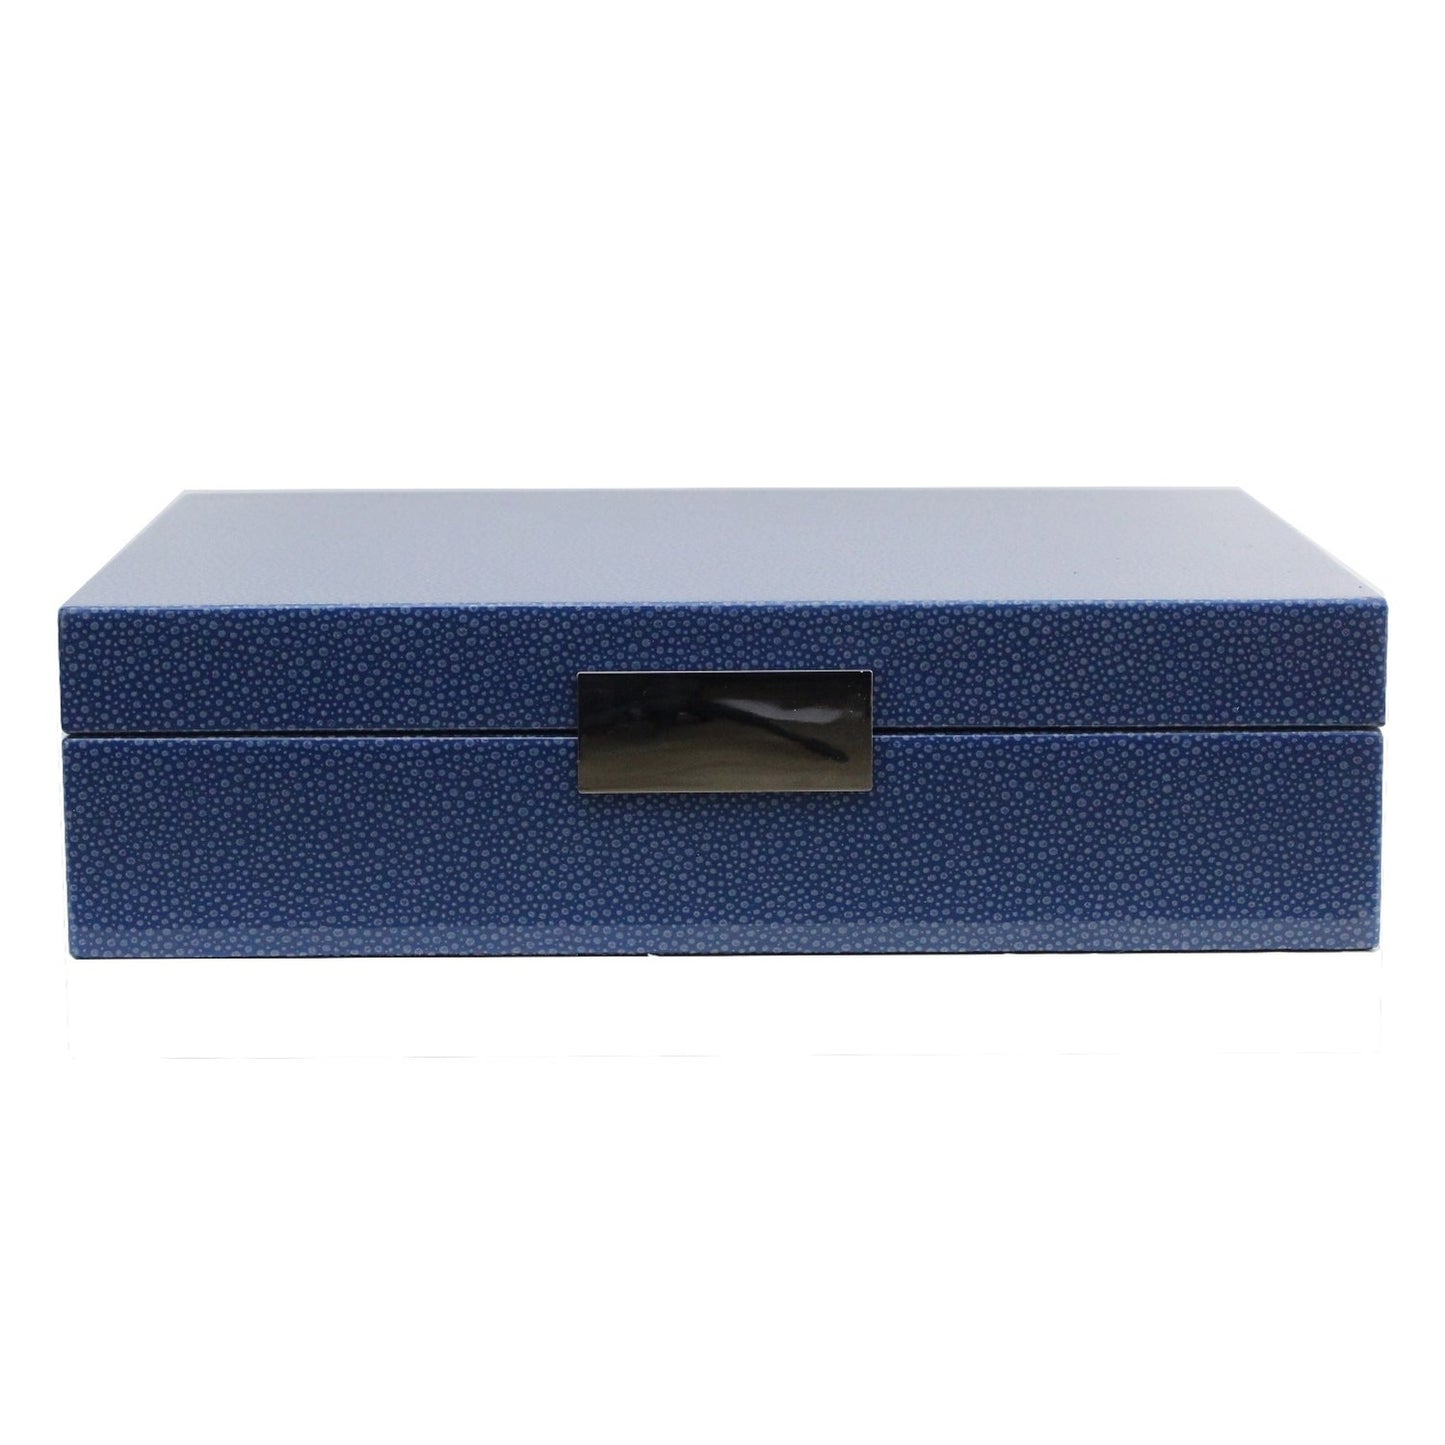 Addison Ross 8x11 Blue & Silver Shagreen Jewelry Box - High Gloss Elegant Design